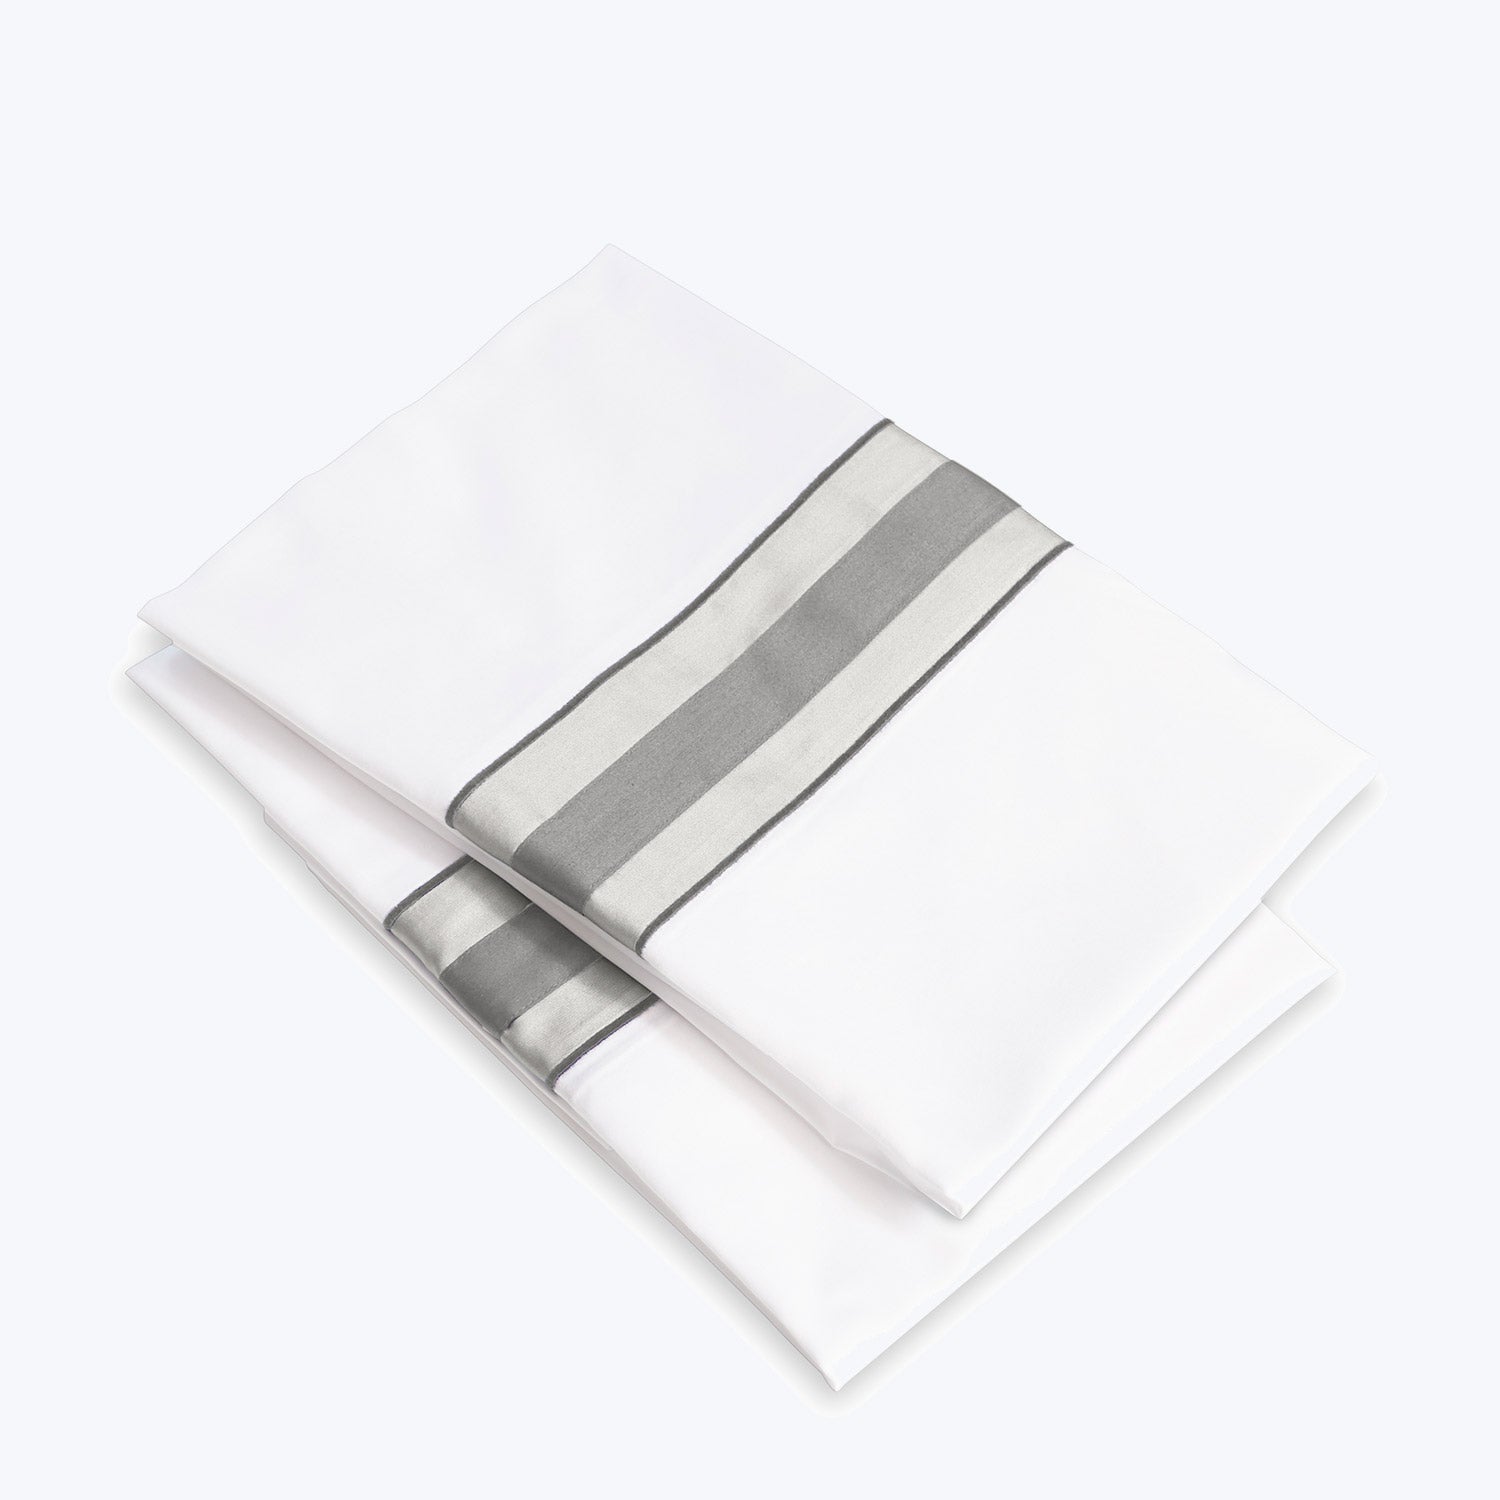 Dimora Sheets & Pillowcases, White/Silver Moon Pillowcase Pair / Standard